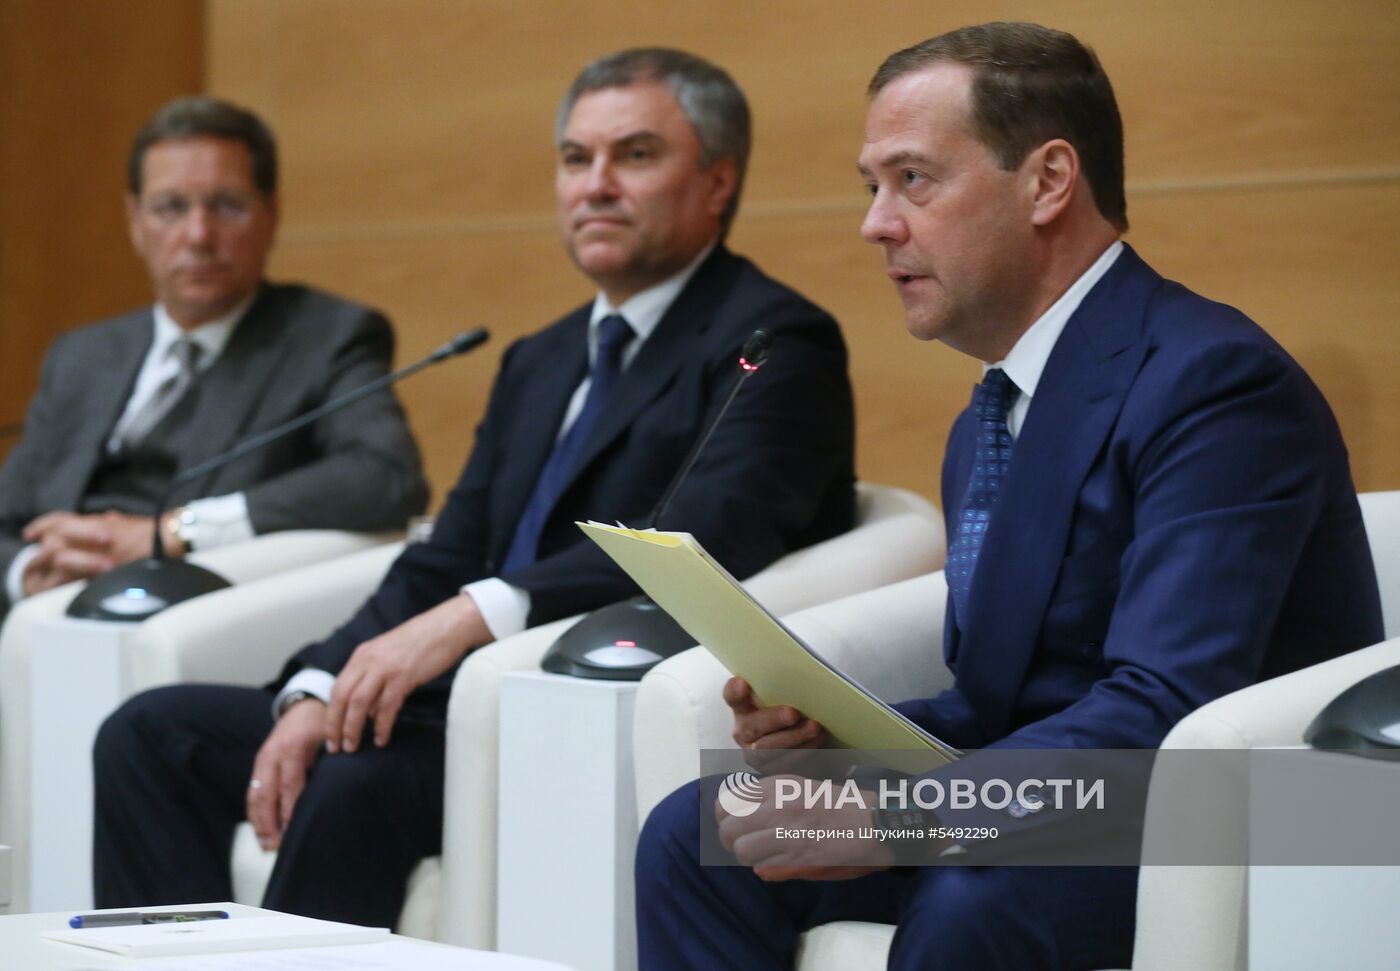 Кандидат на пост премьер-министра РФ Д. Медведев встретился с депутатами фракции «Единая Россия» в Госдуме РФ